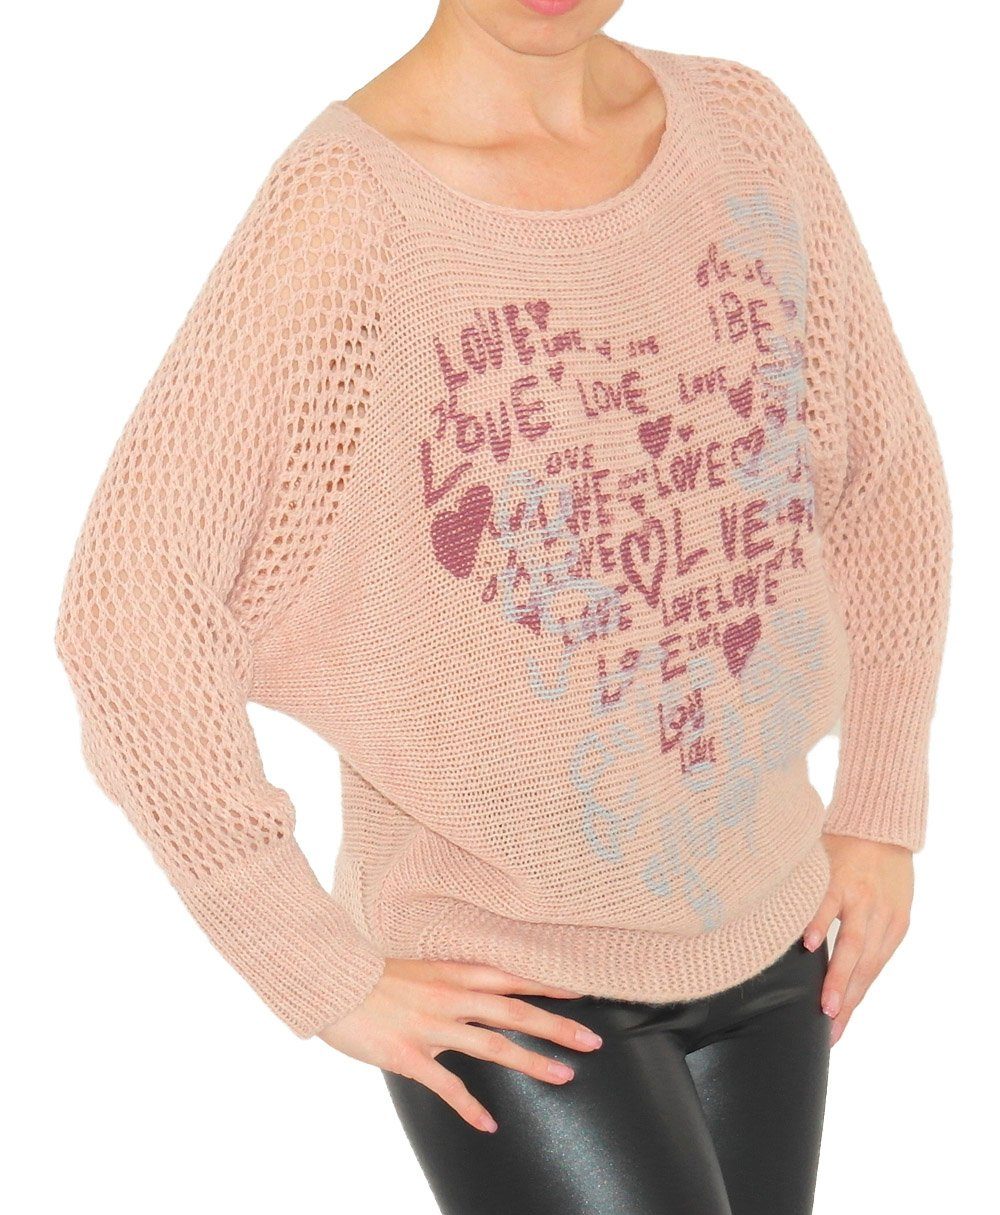 YESET Longpullover Pullover Wolle Top-Netz Love-Blumen rosa Pulli Strick leicht